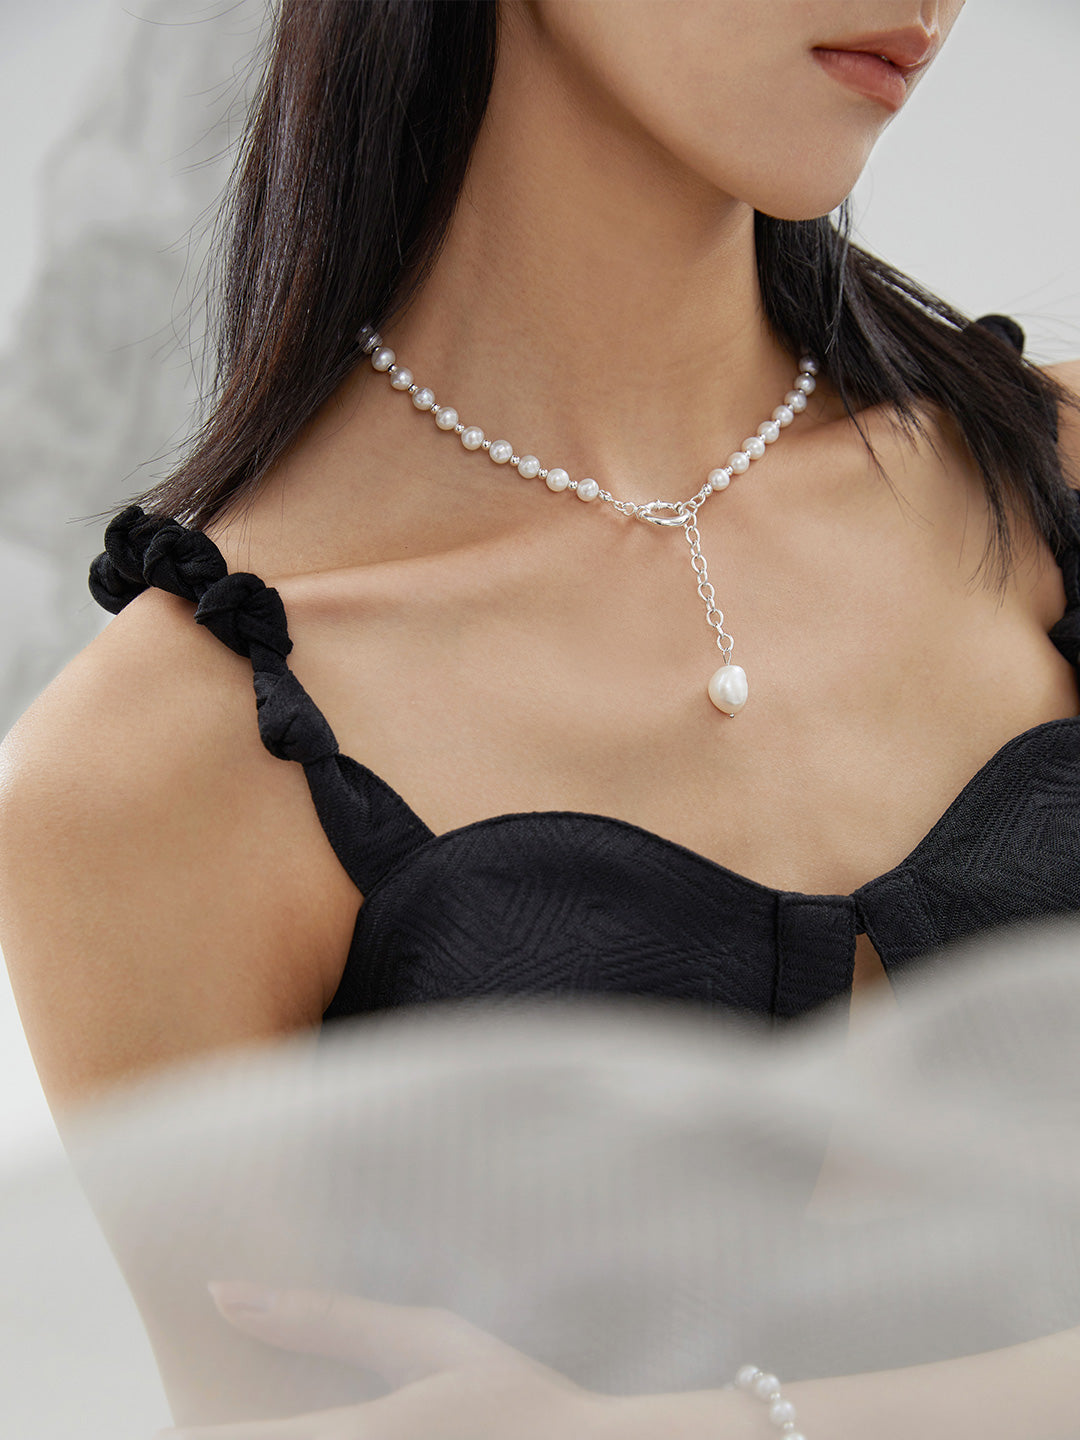 Lilyvot Jewelry Sophia Pearl Pendant Adjustable Necklace_2